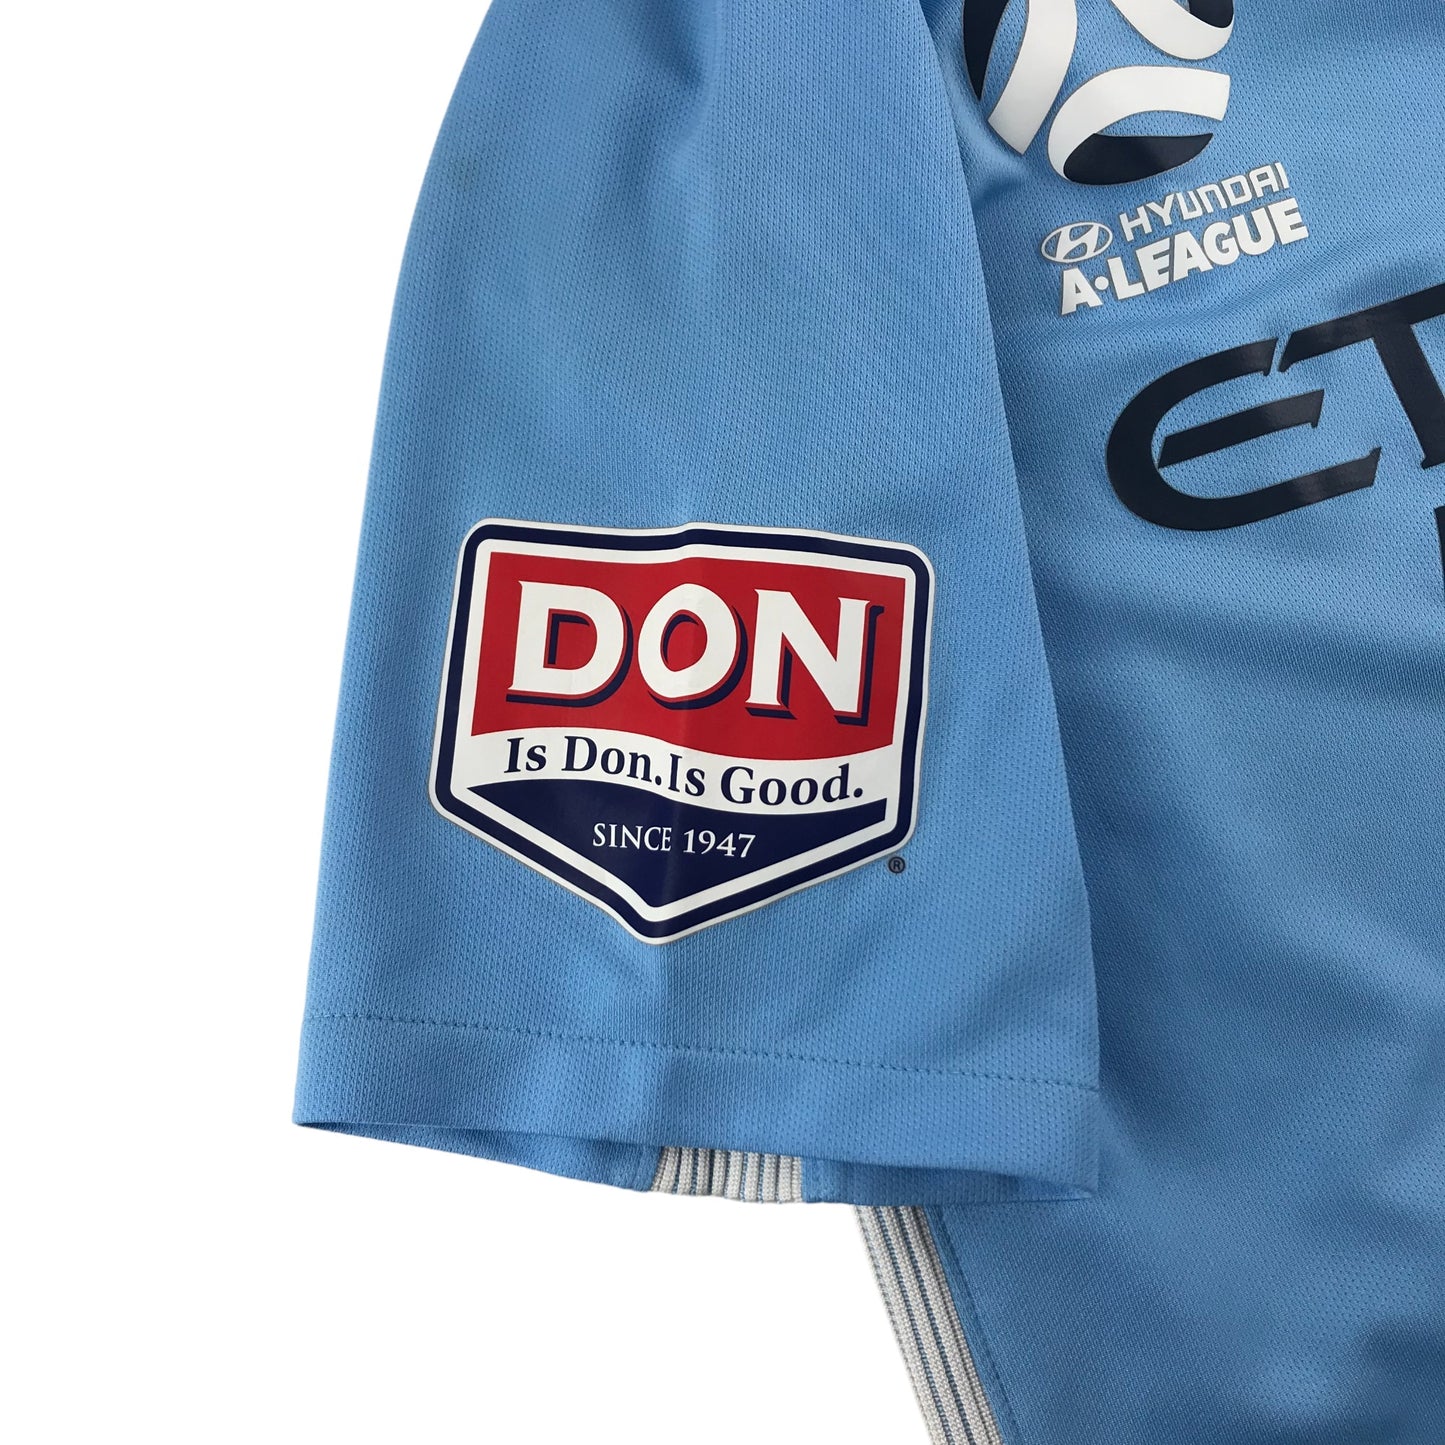 Nike Melbourne City FC 18/19 Home Football Top Size M Light Blue Short Sleeve